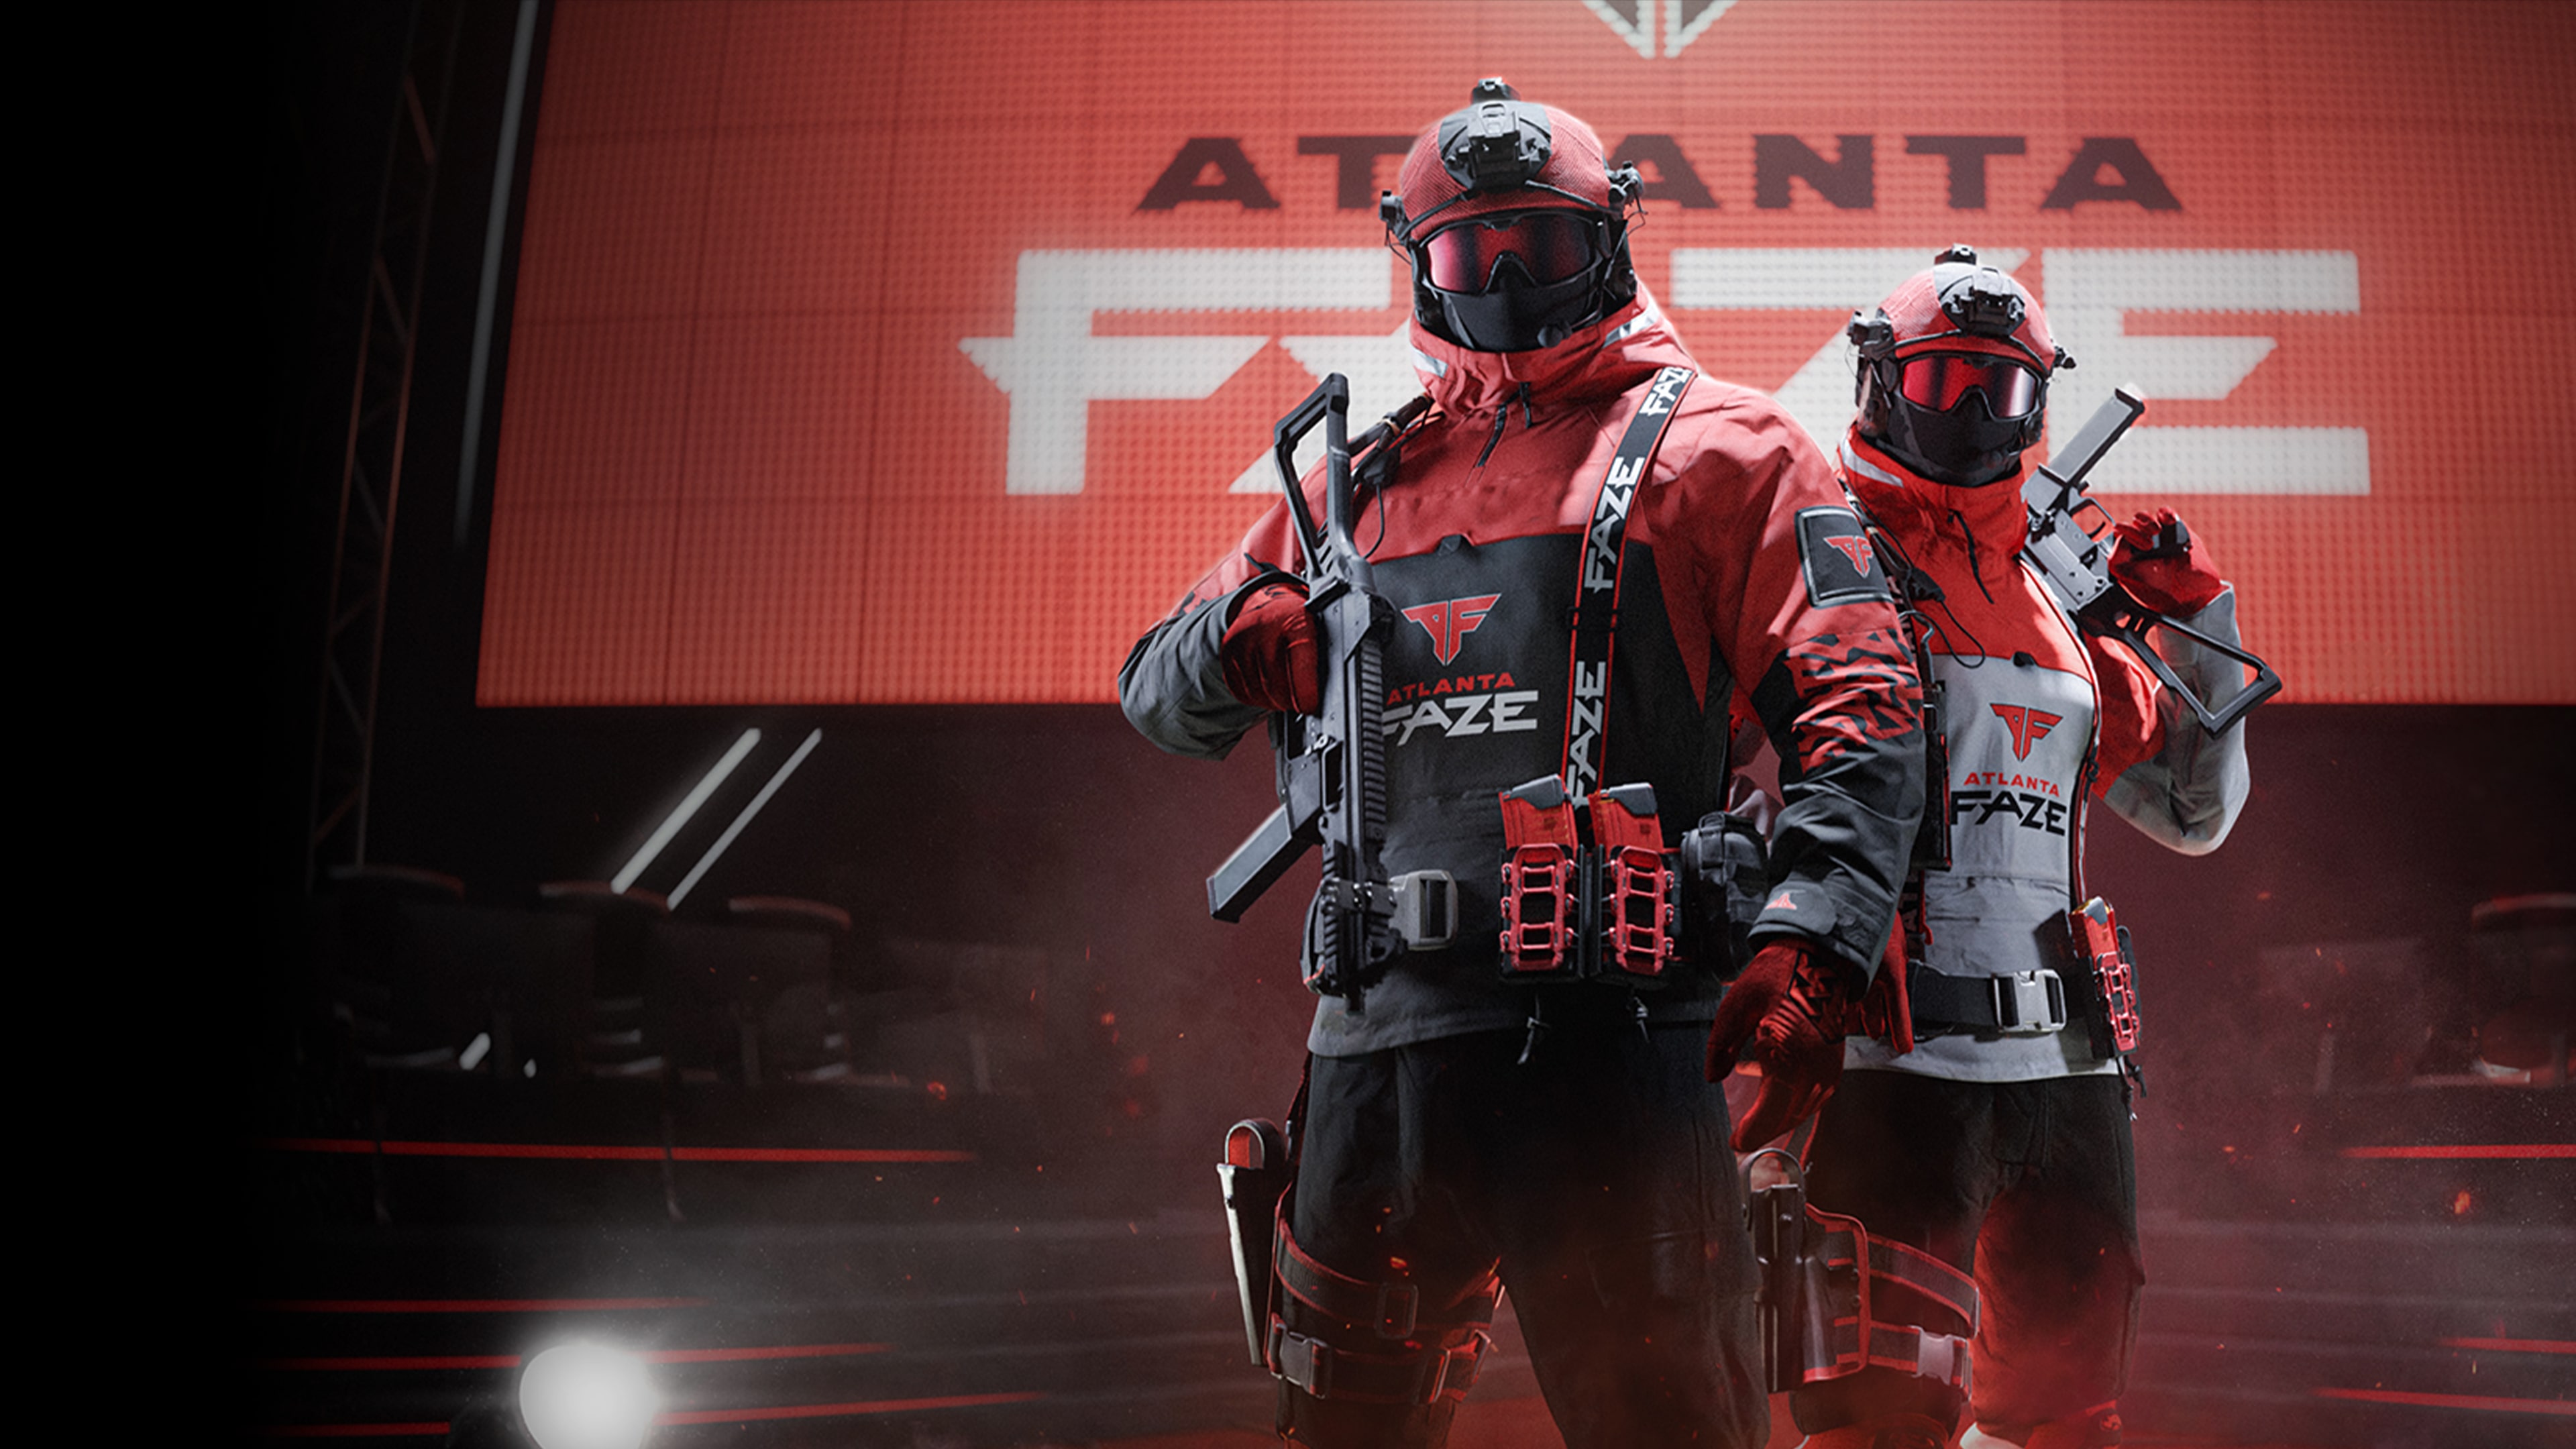 Call of Duty League™ - Atlanta FaZe Team Pack 2024